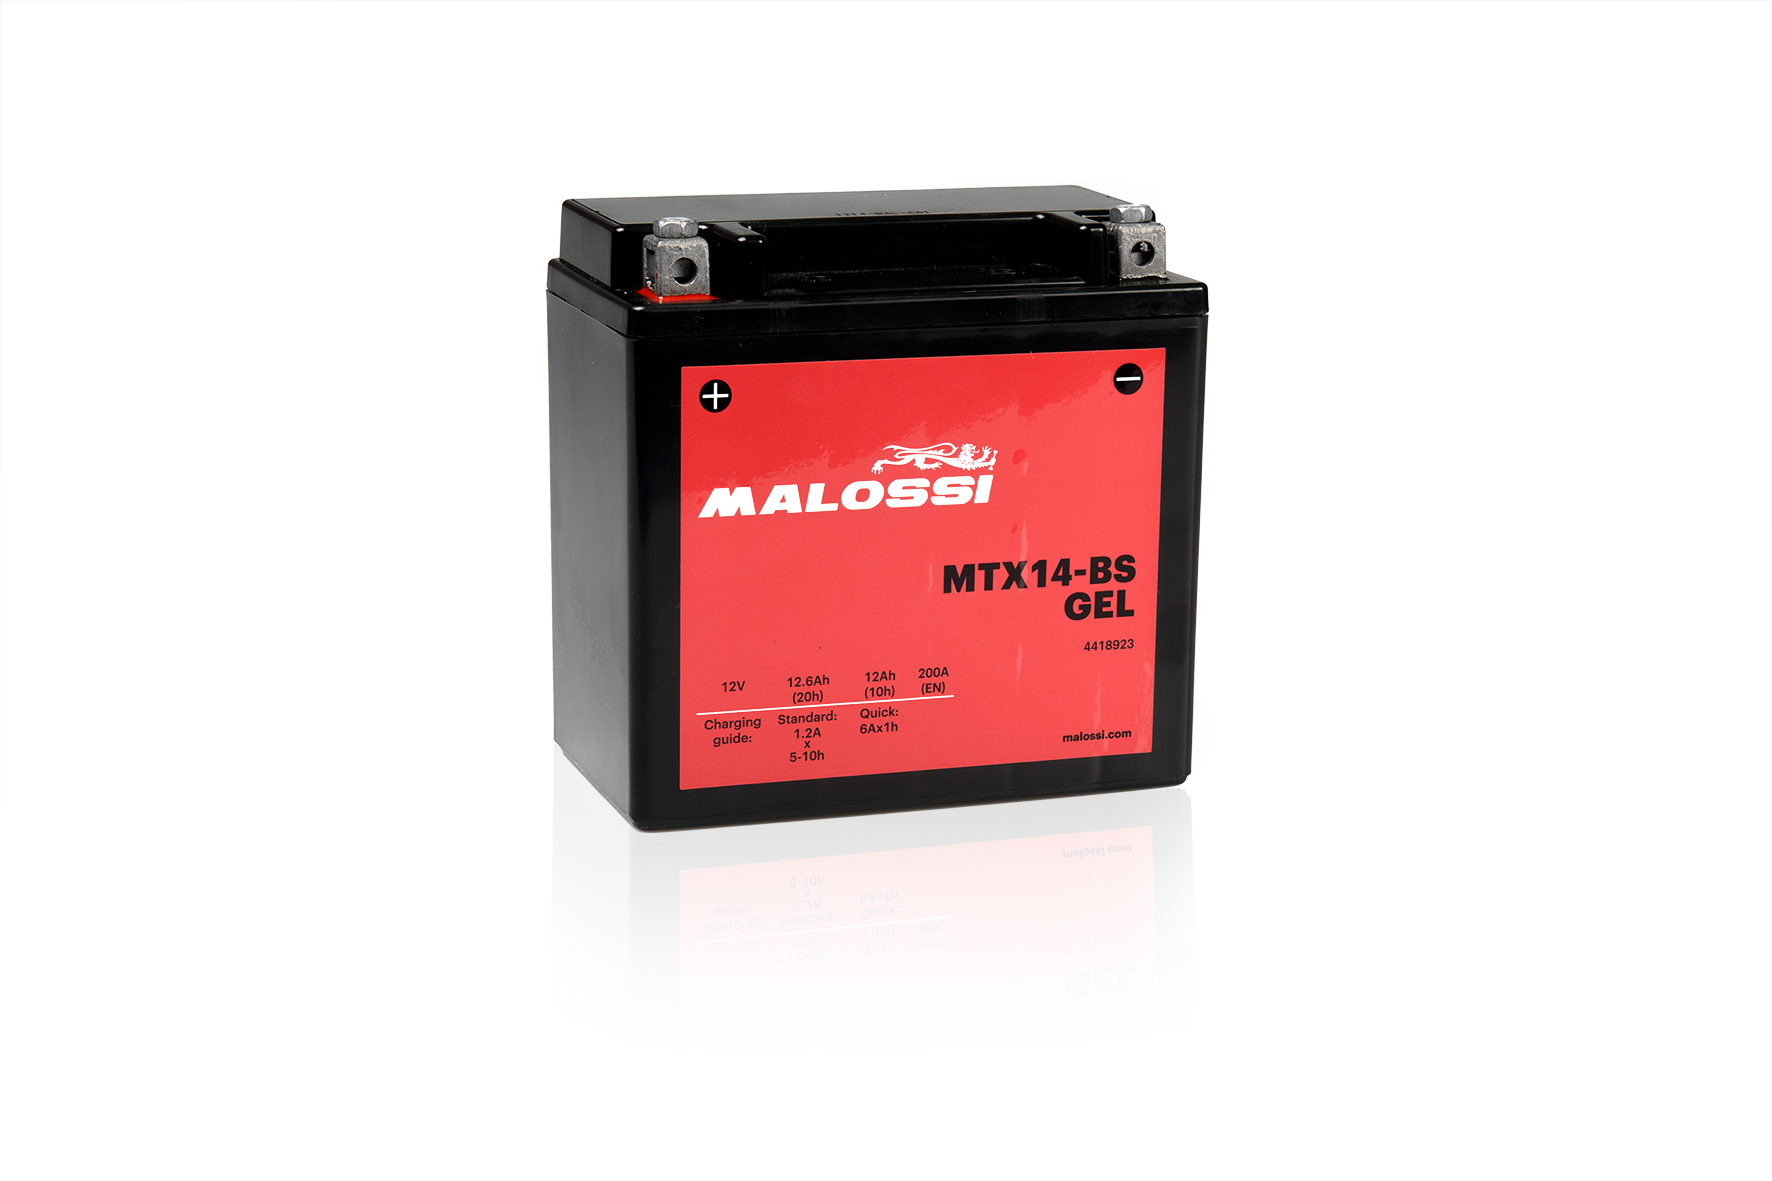 MF2923 - Battery Gel YB4L-B 4AH MALOSSI BOOSTER BWs F12 Aerox Nitro Zip NRG  Sp